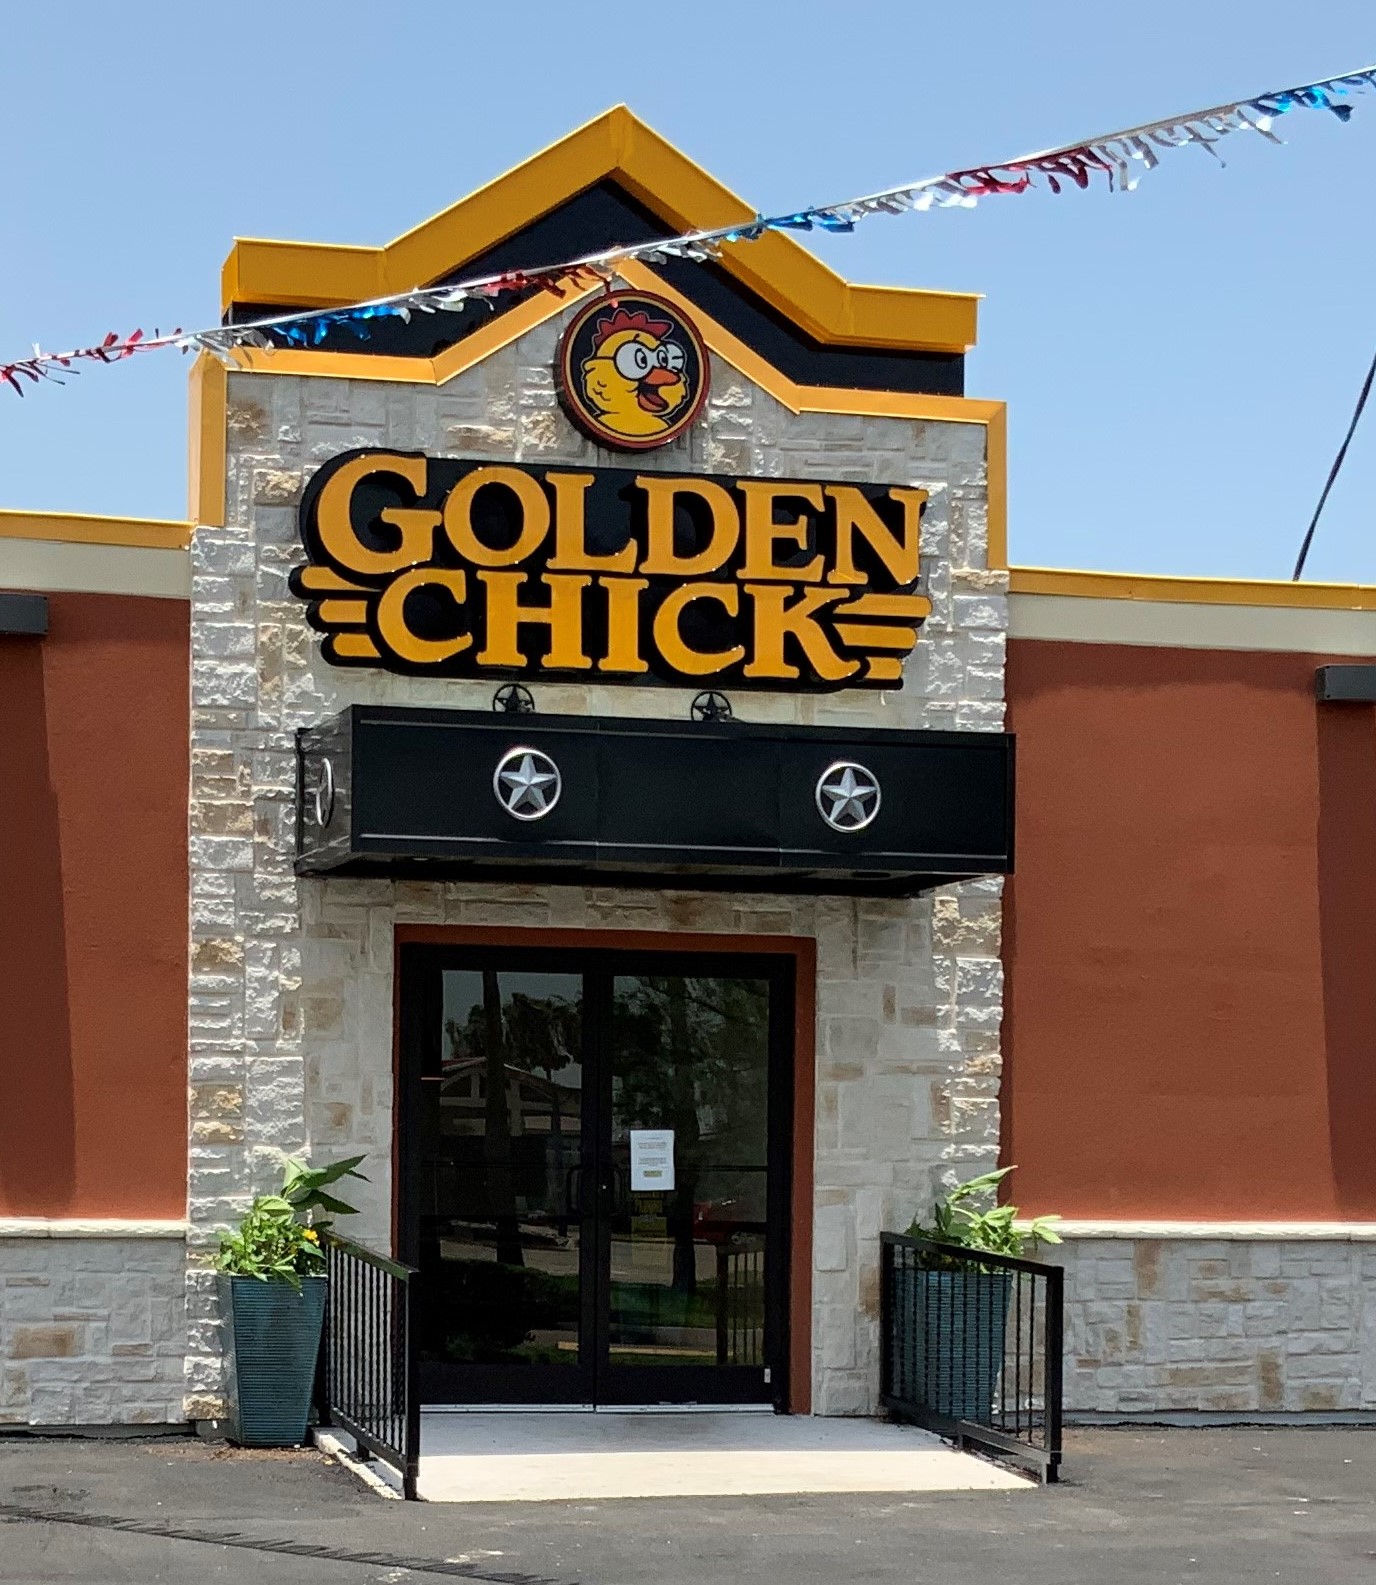 Golden Chick storefront.  Your local Golden Chick fast food restaurant in La Joya, Texas